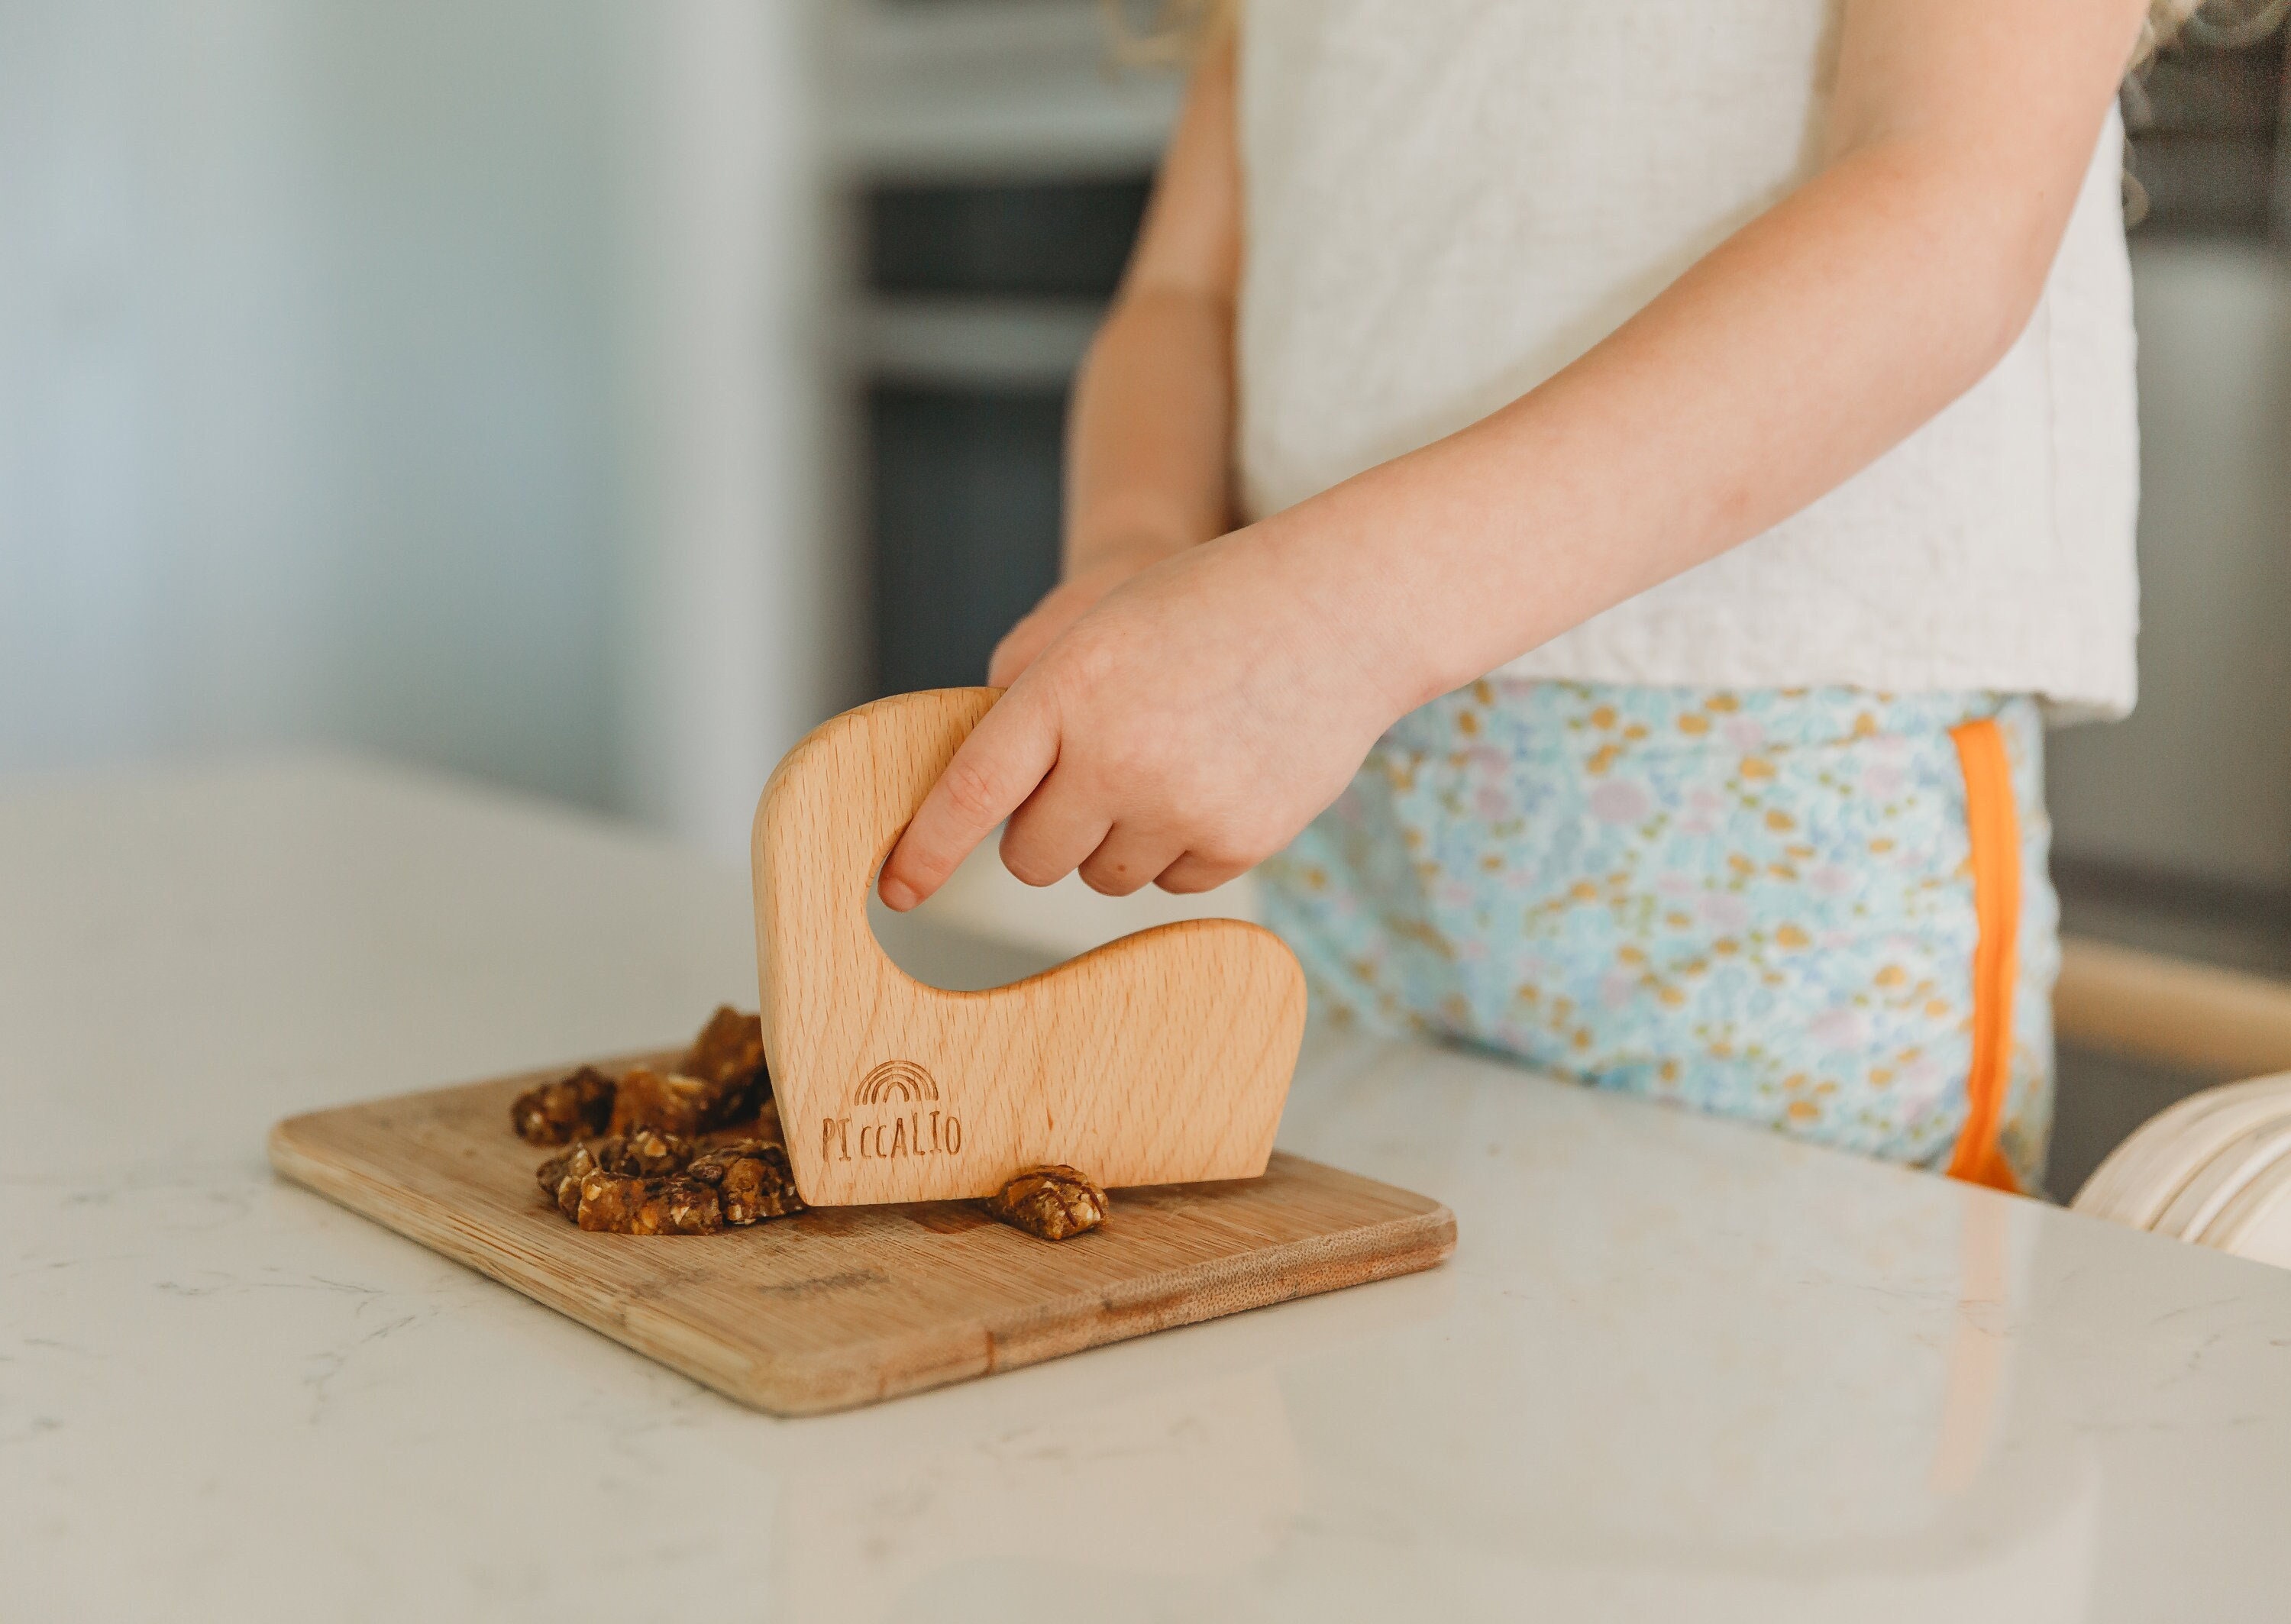 Safe and Fun Montessori Knife Set